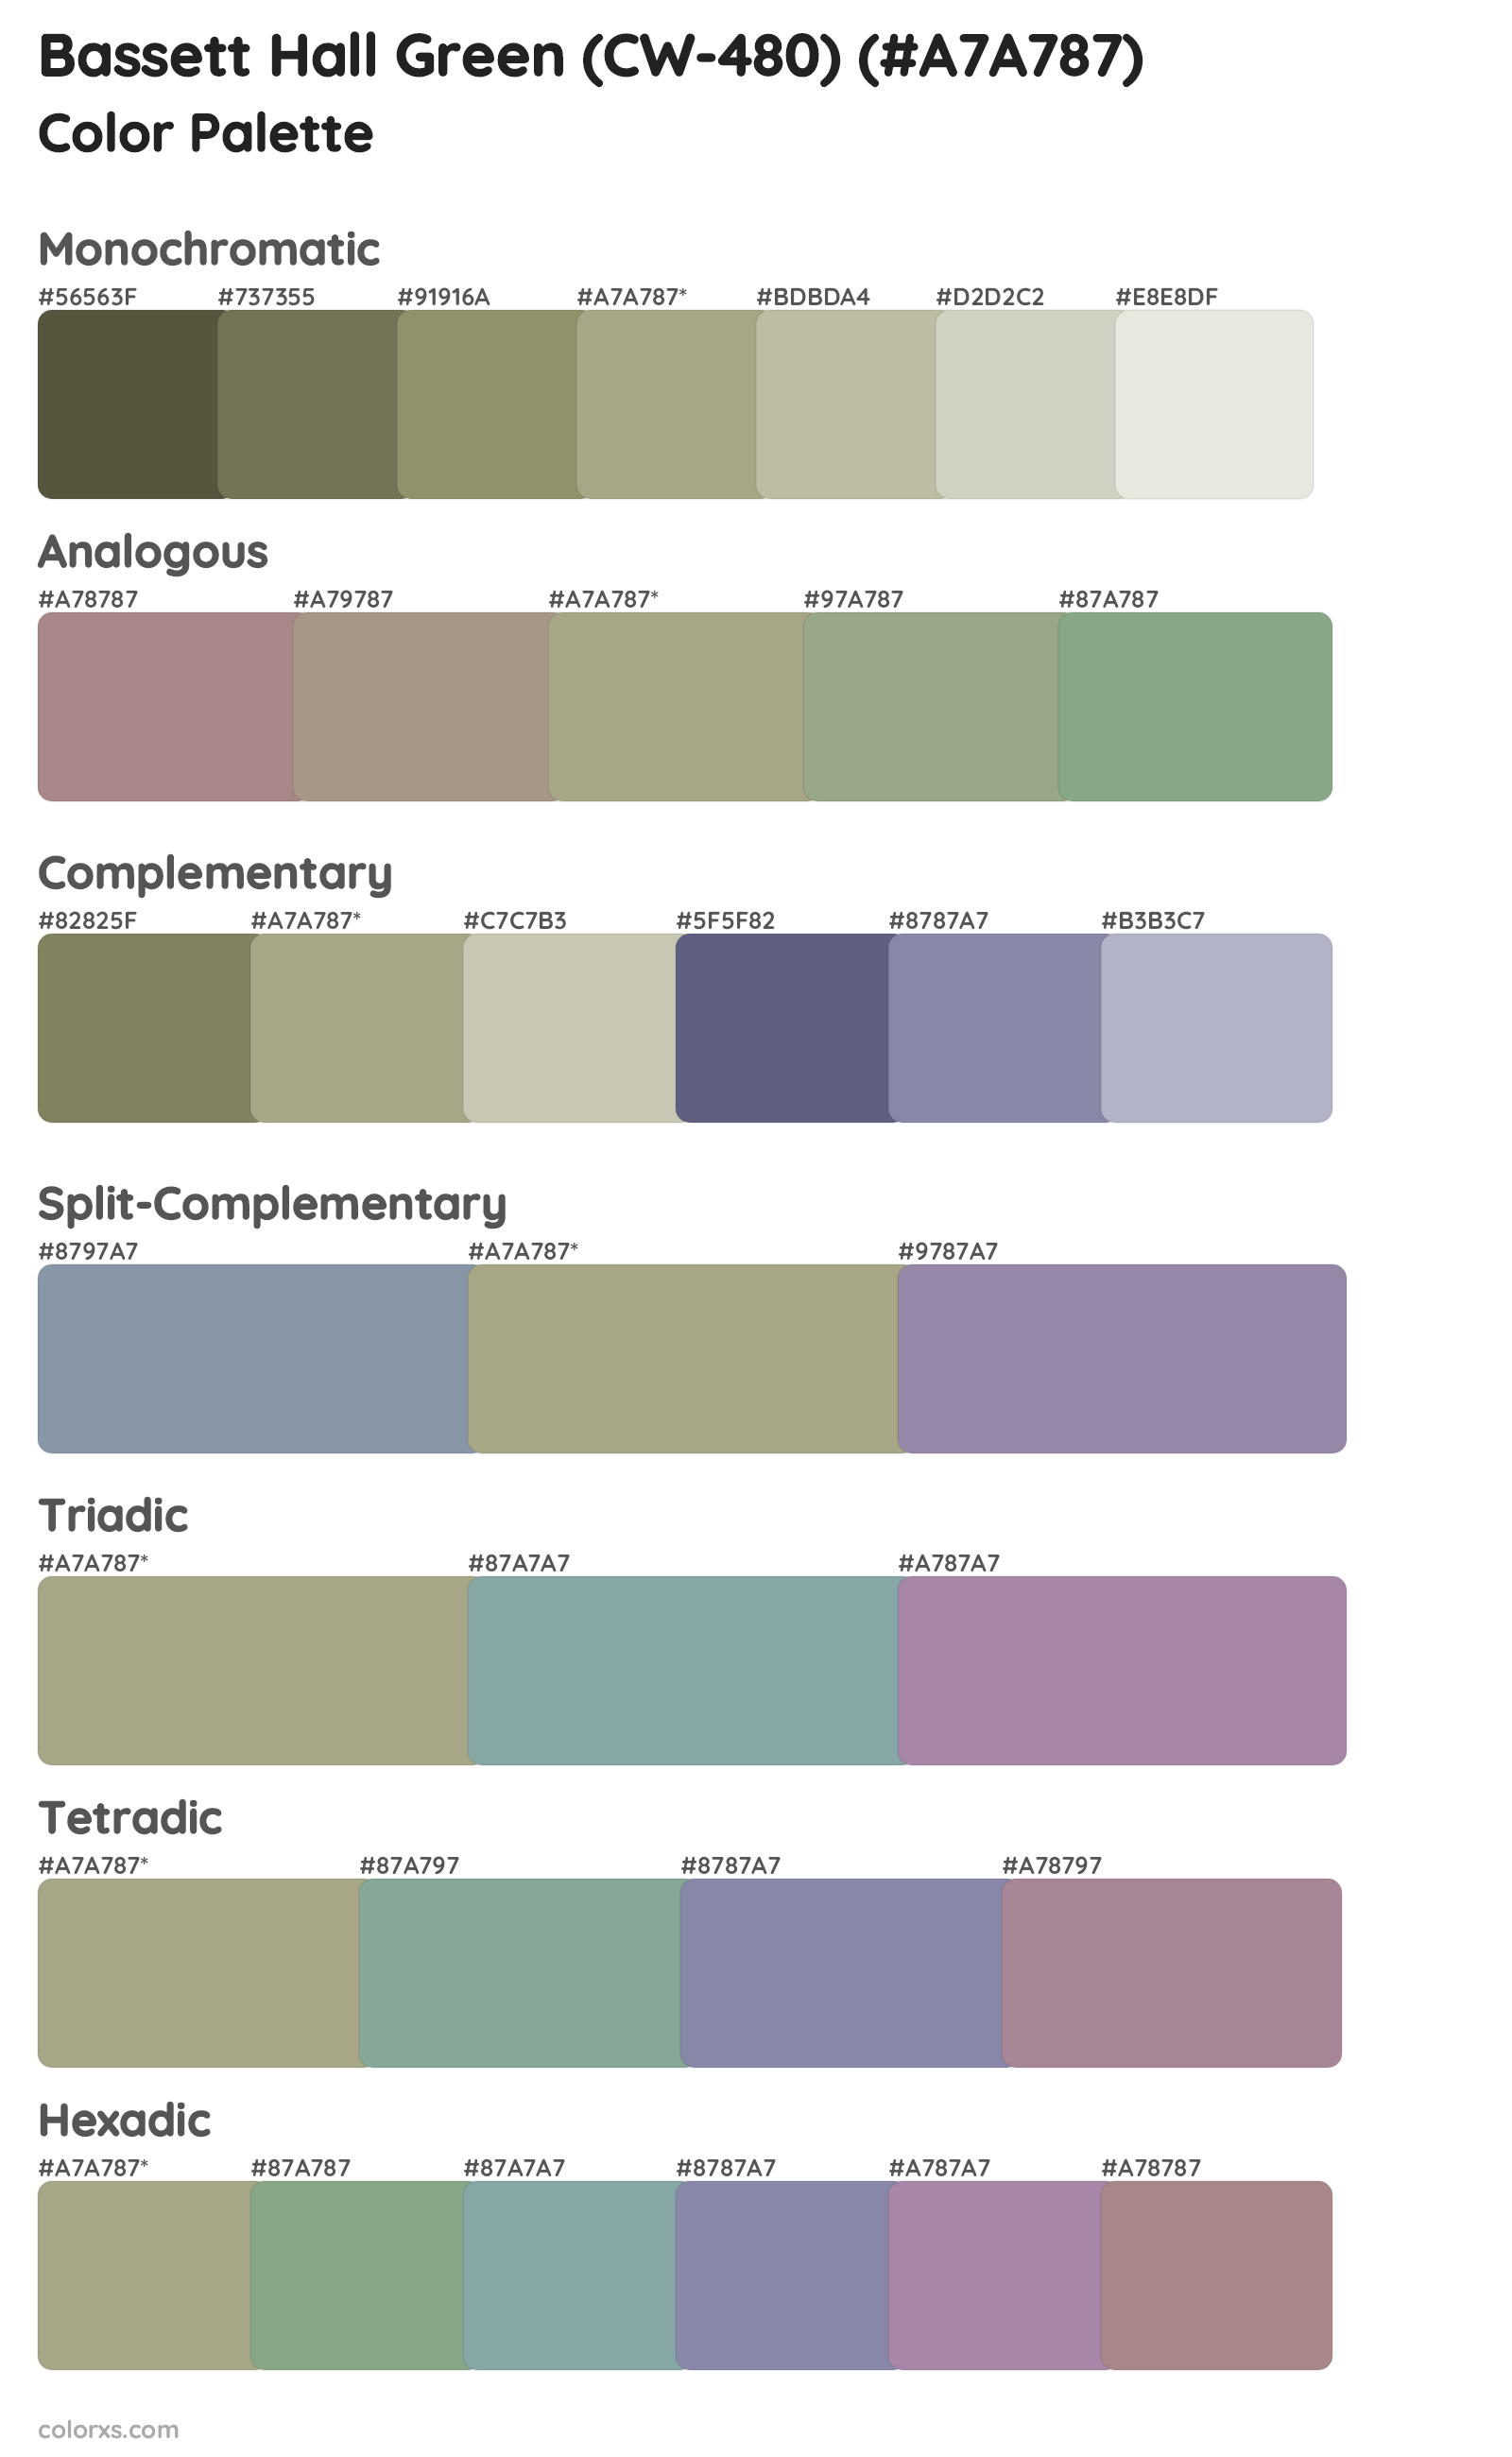 Bassett Hall Green (CW-480) Color Scheme Palettes